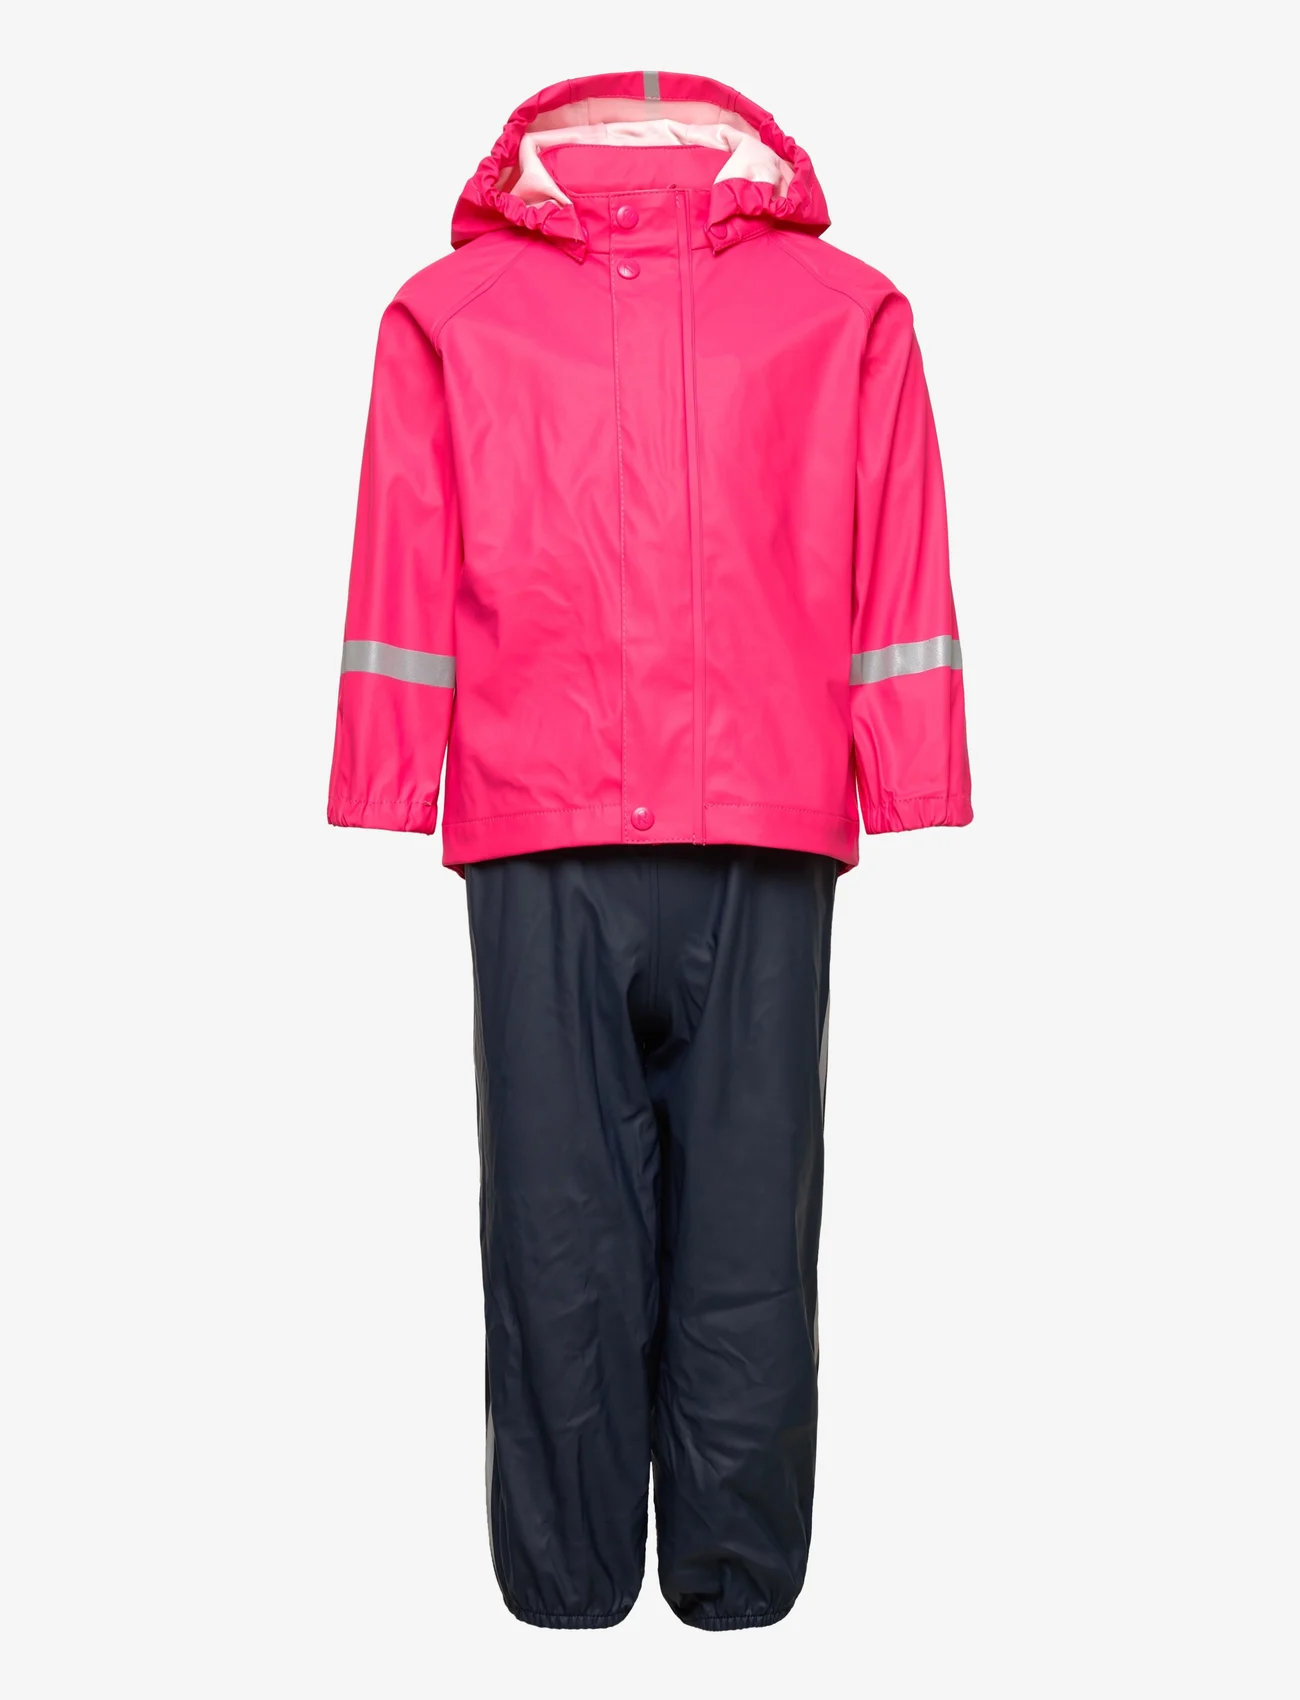 Reima - Rain outfit, Tihku - rain sets - candy pink - 0